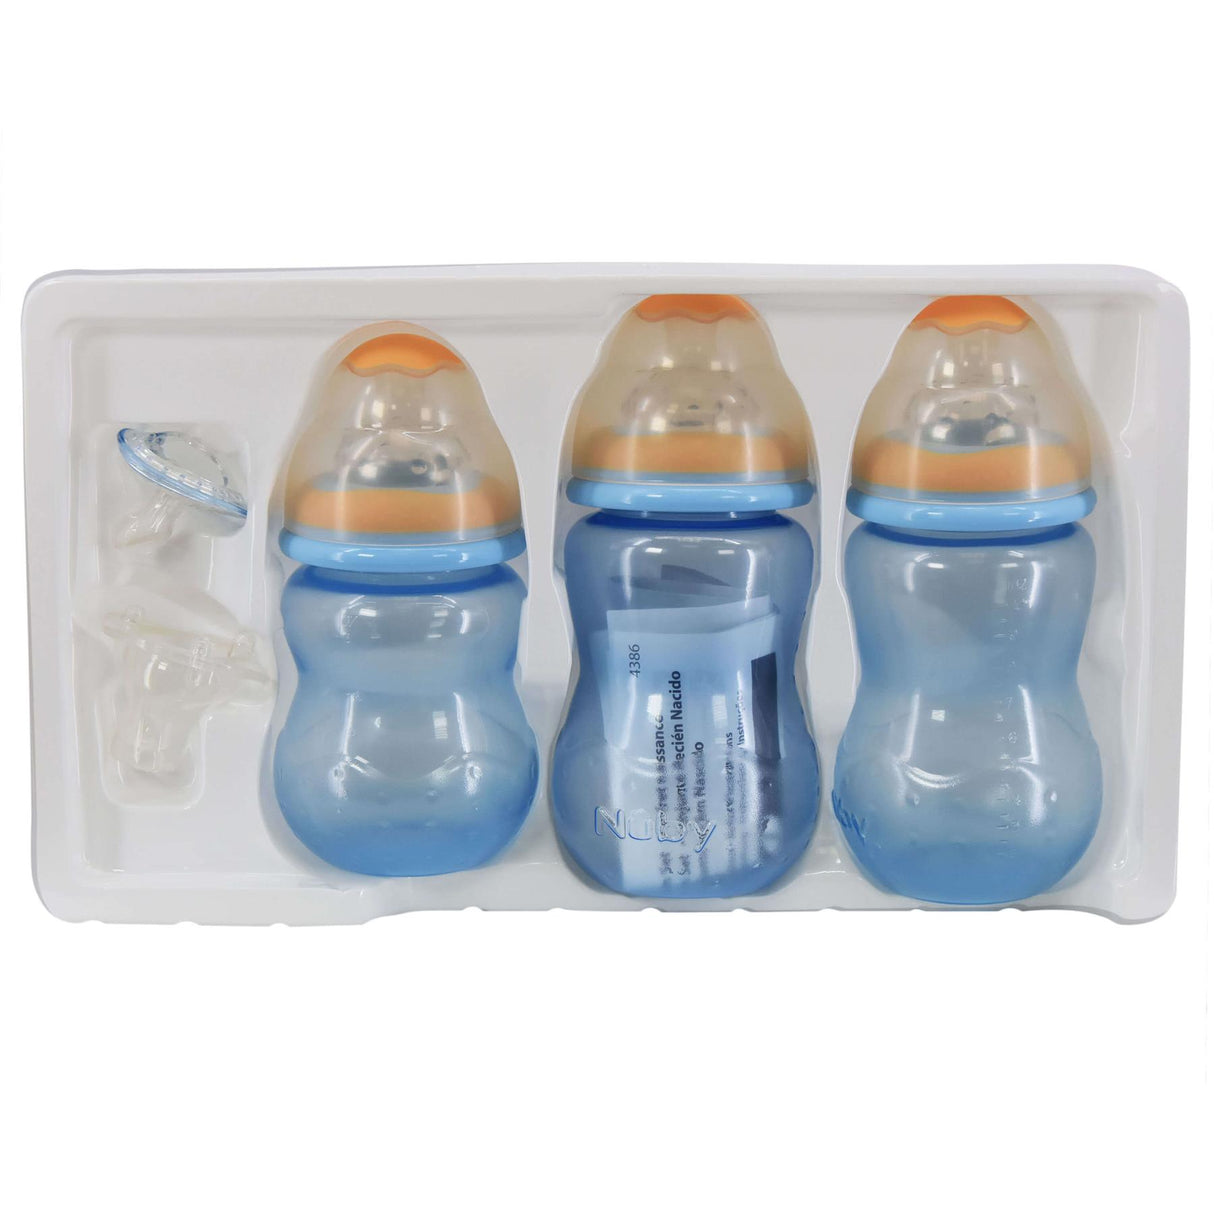 Nuby Newborn Bottles & Soother Set - Blue by Nuby - UKBuyZone